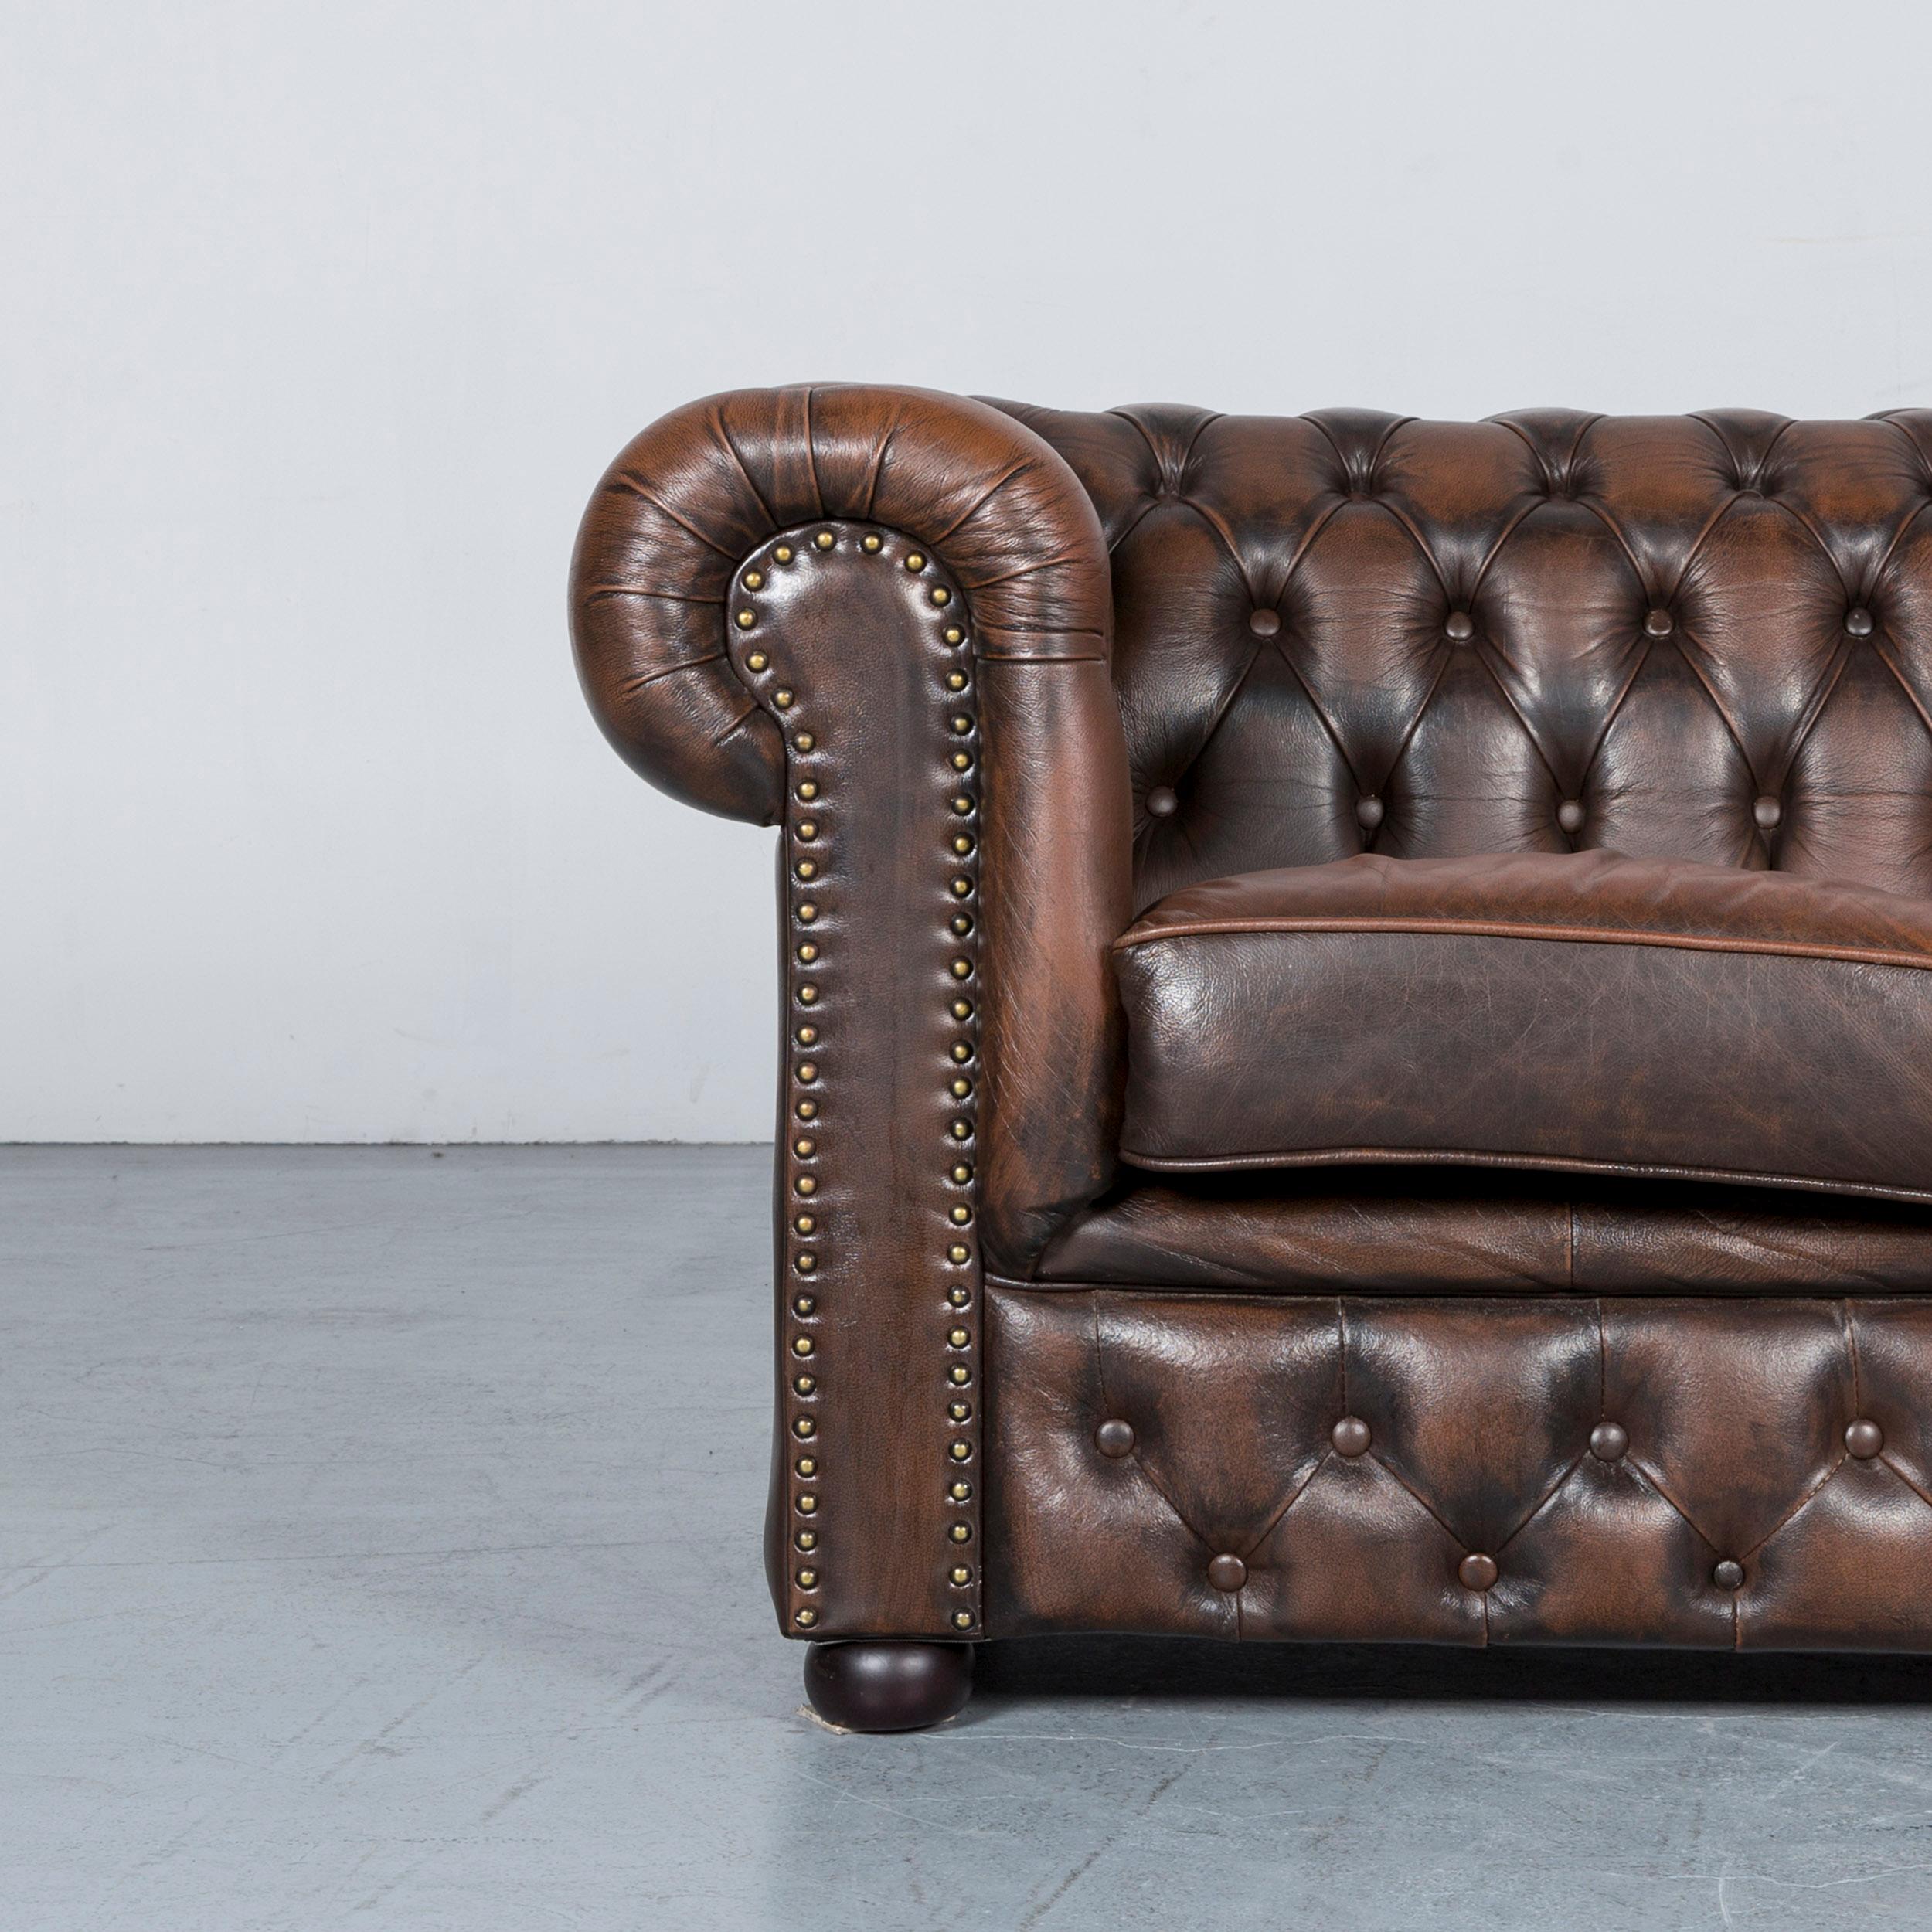 British Chesterfield Leather Sofa Brown Three-Seat Armchair Set Vintage Retro